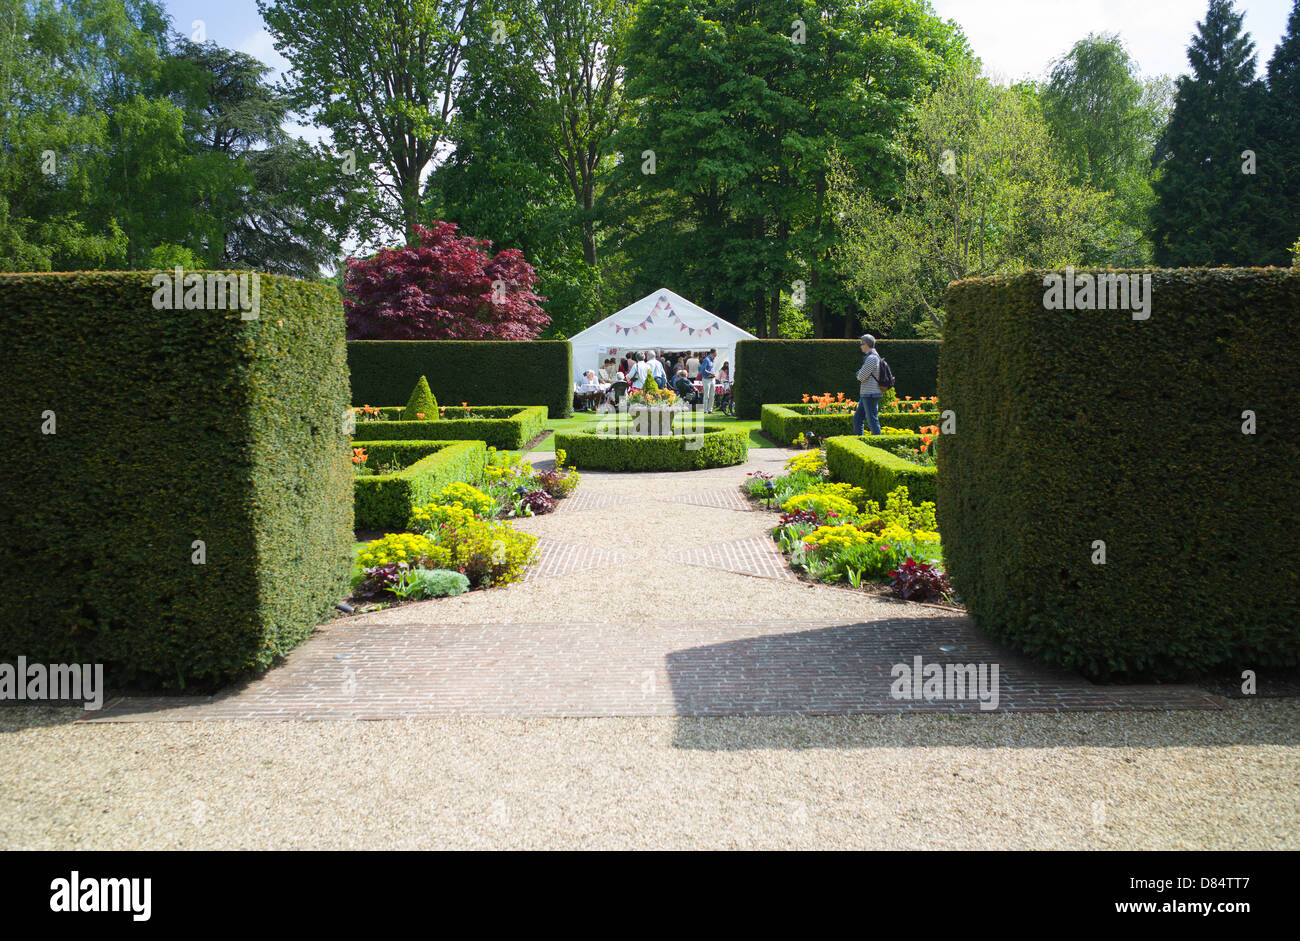 charity open garden tea tent, formal garden, clipped hedges Stock Photo